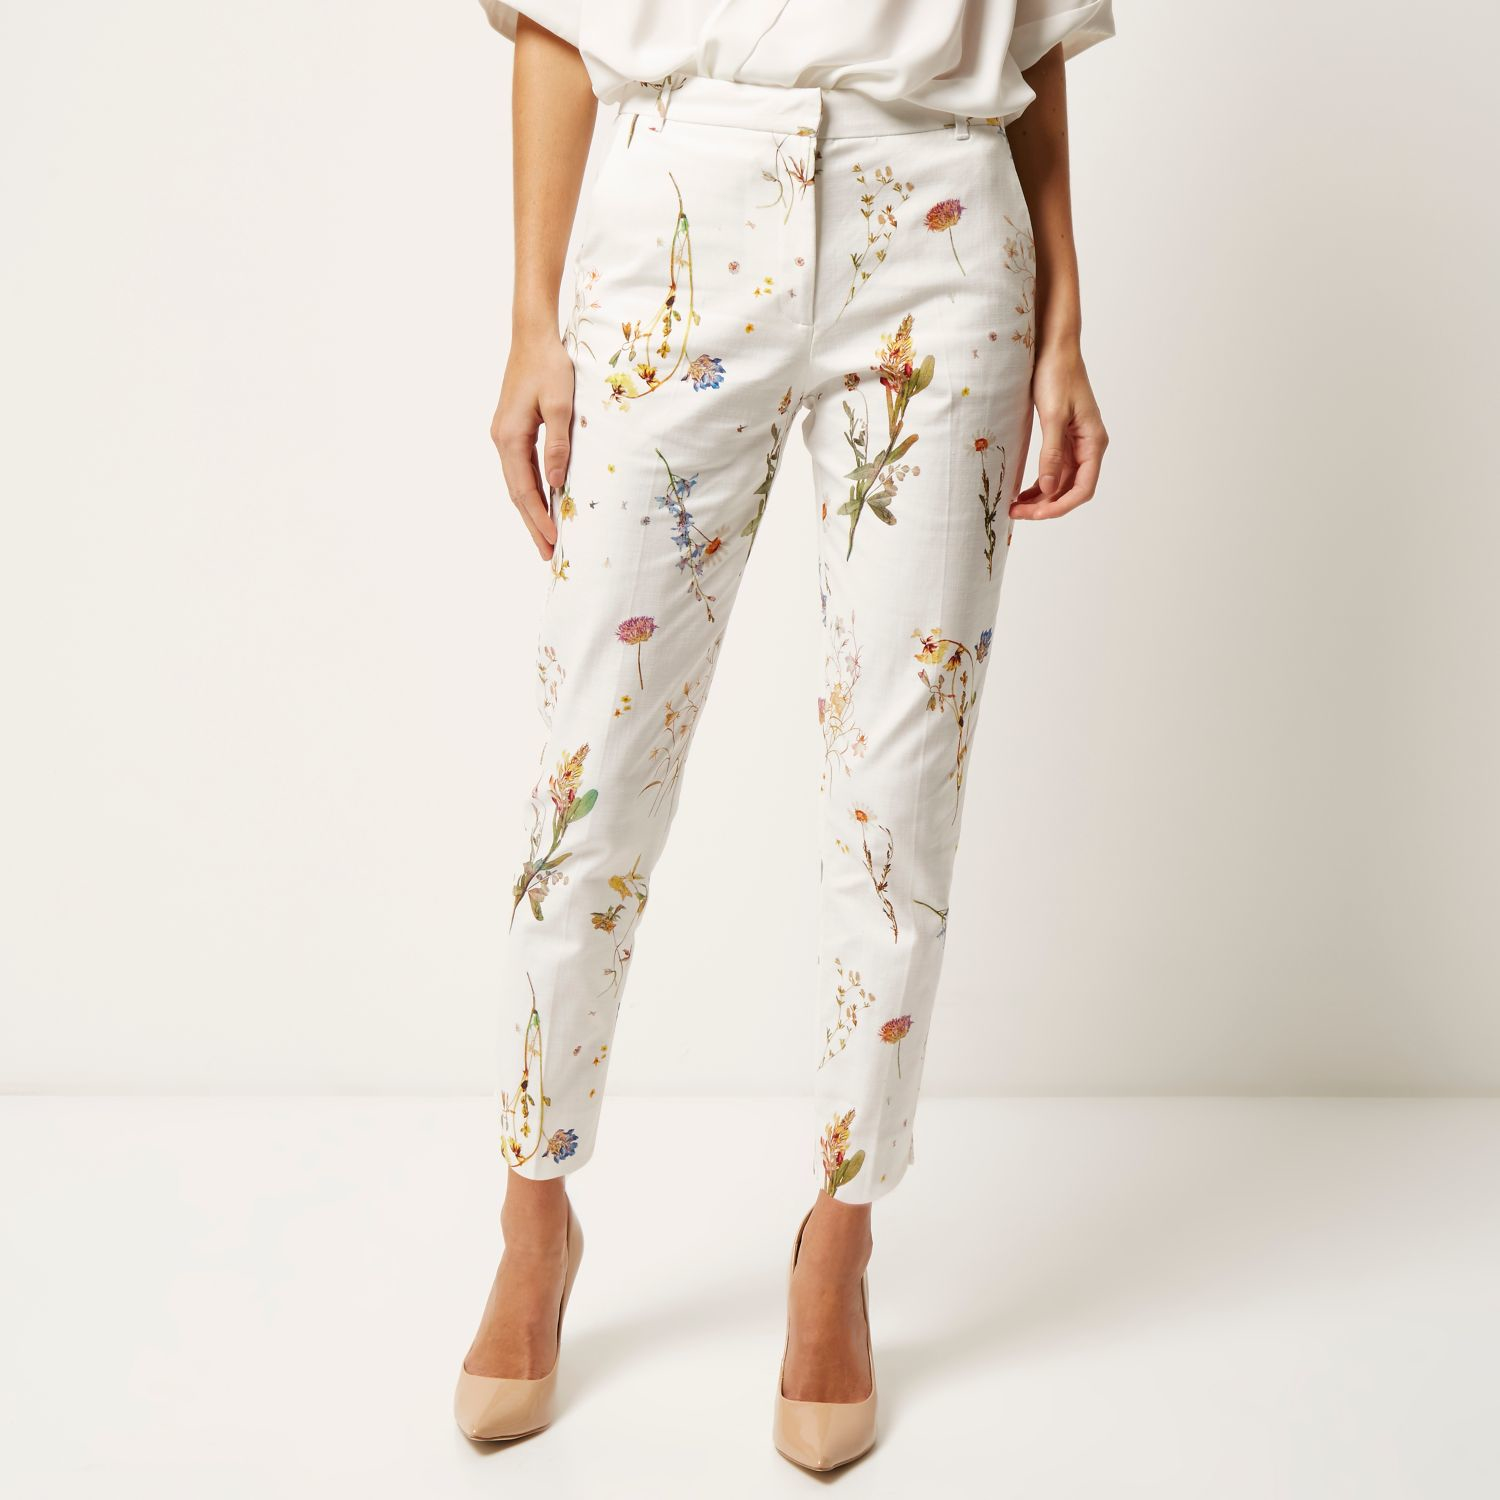 White floral pants